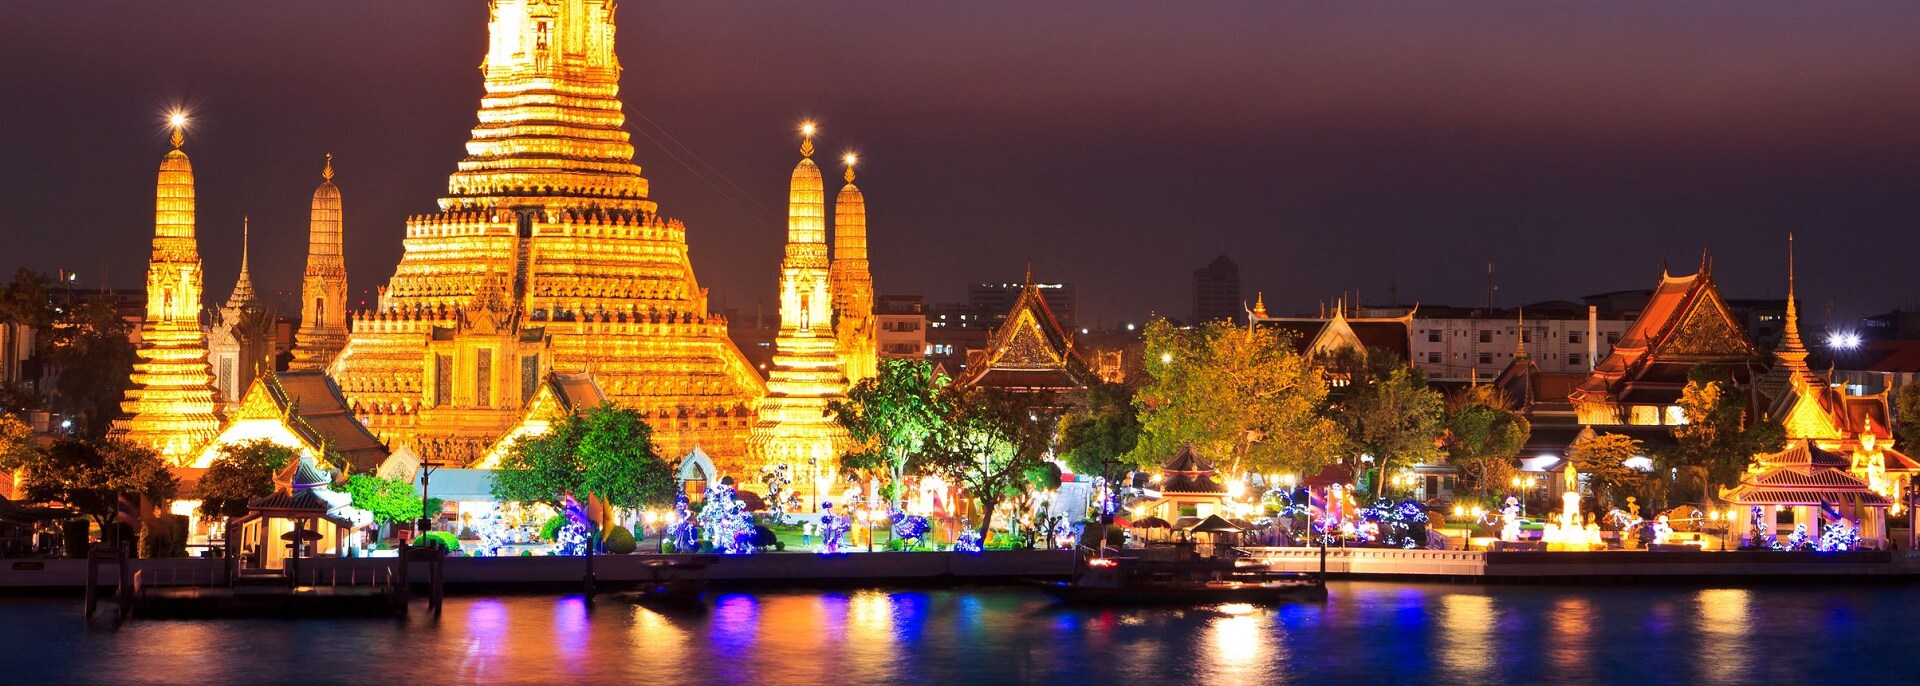 Thailand pic